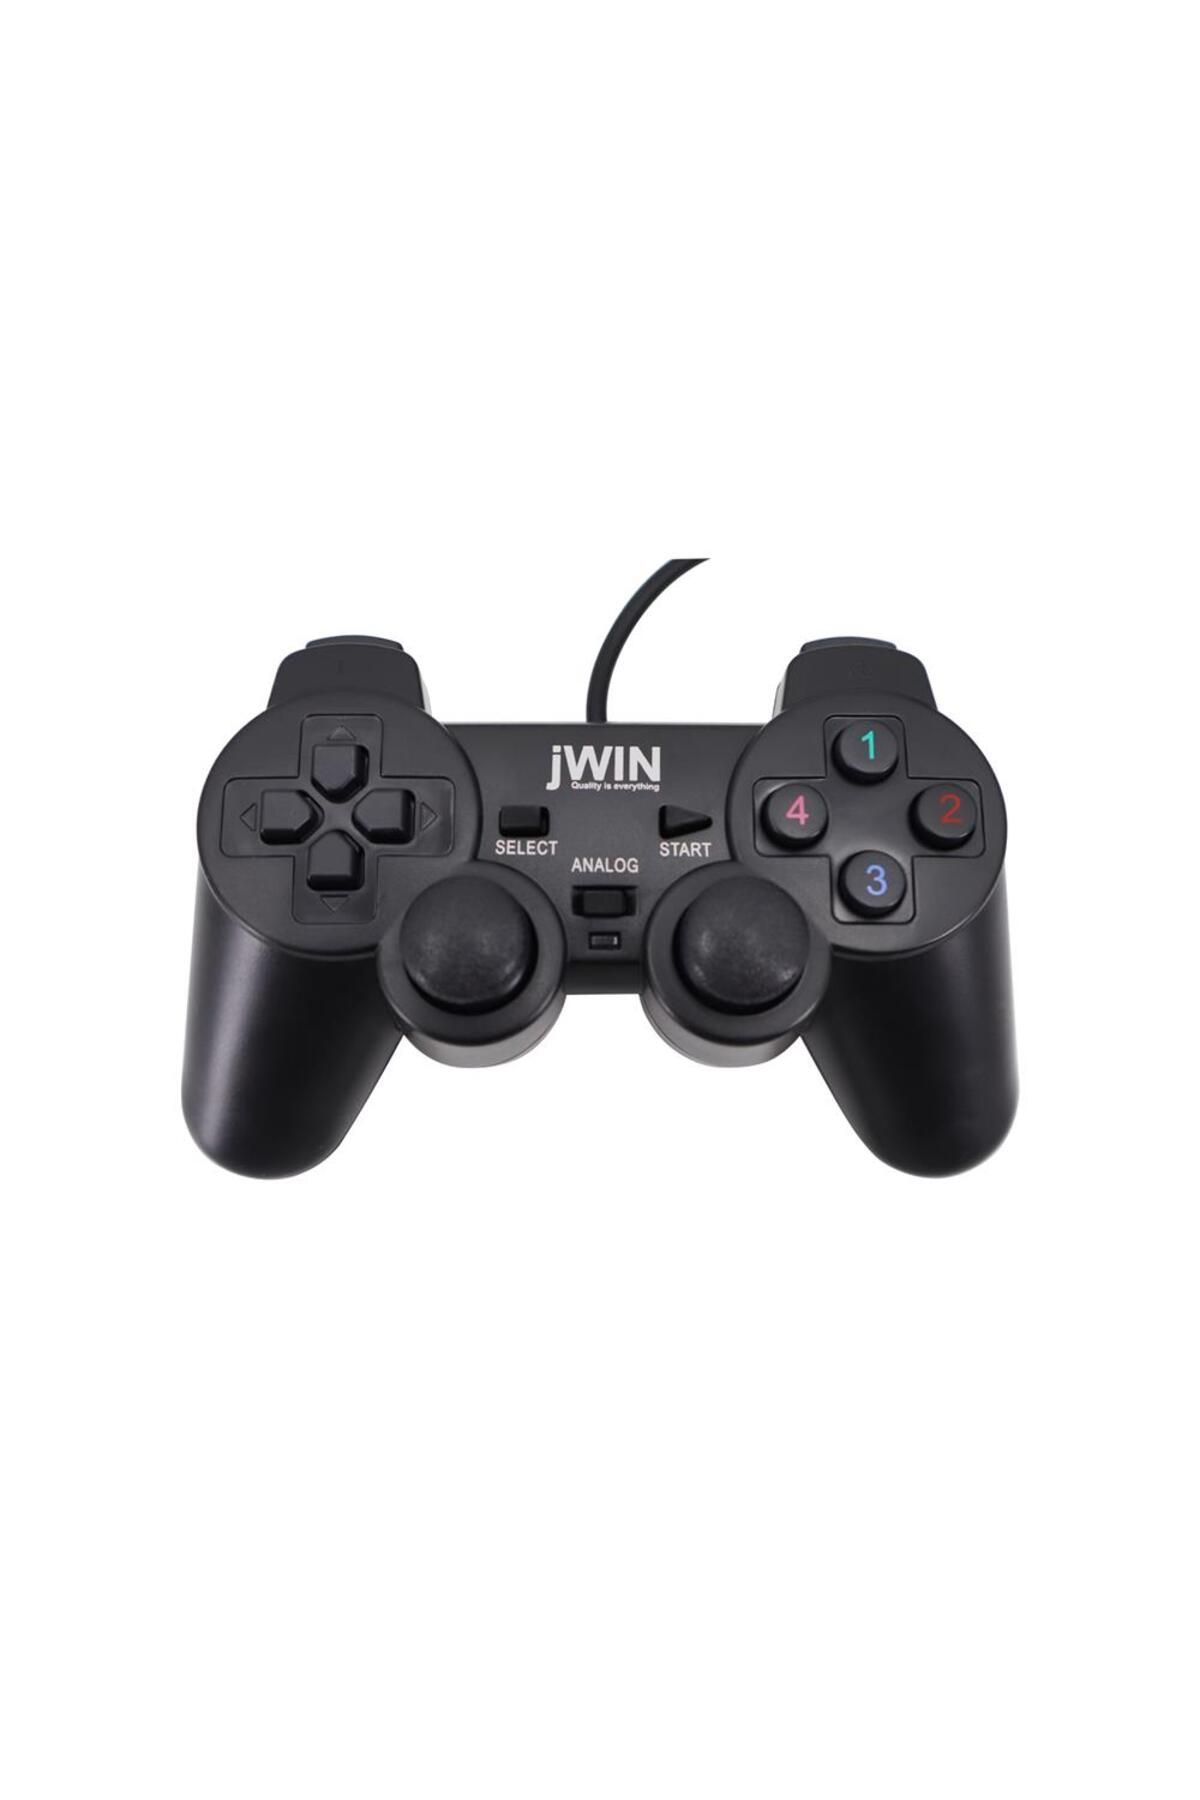 JWIN Usb-1132pc Gamepad Bilgisayar Oyun Kolu